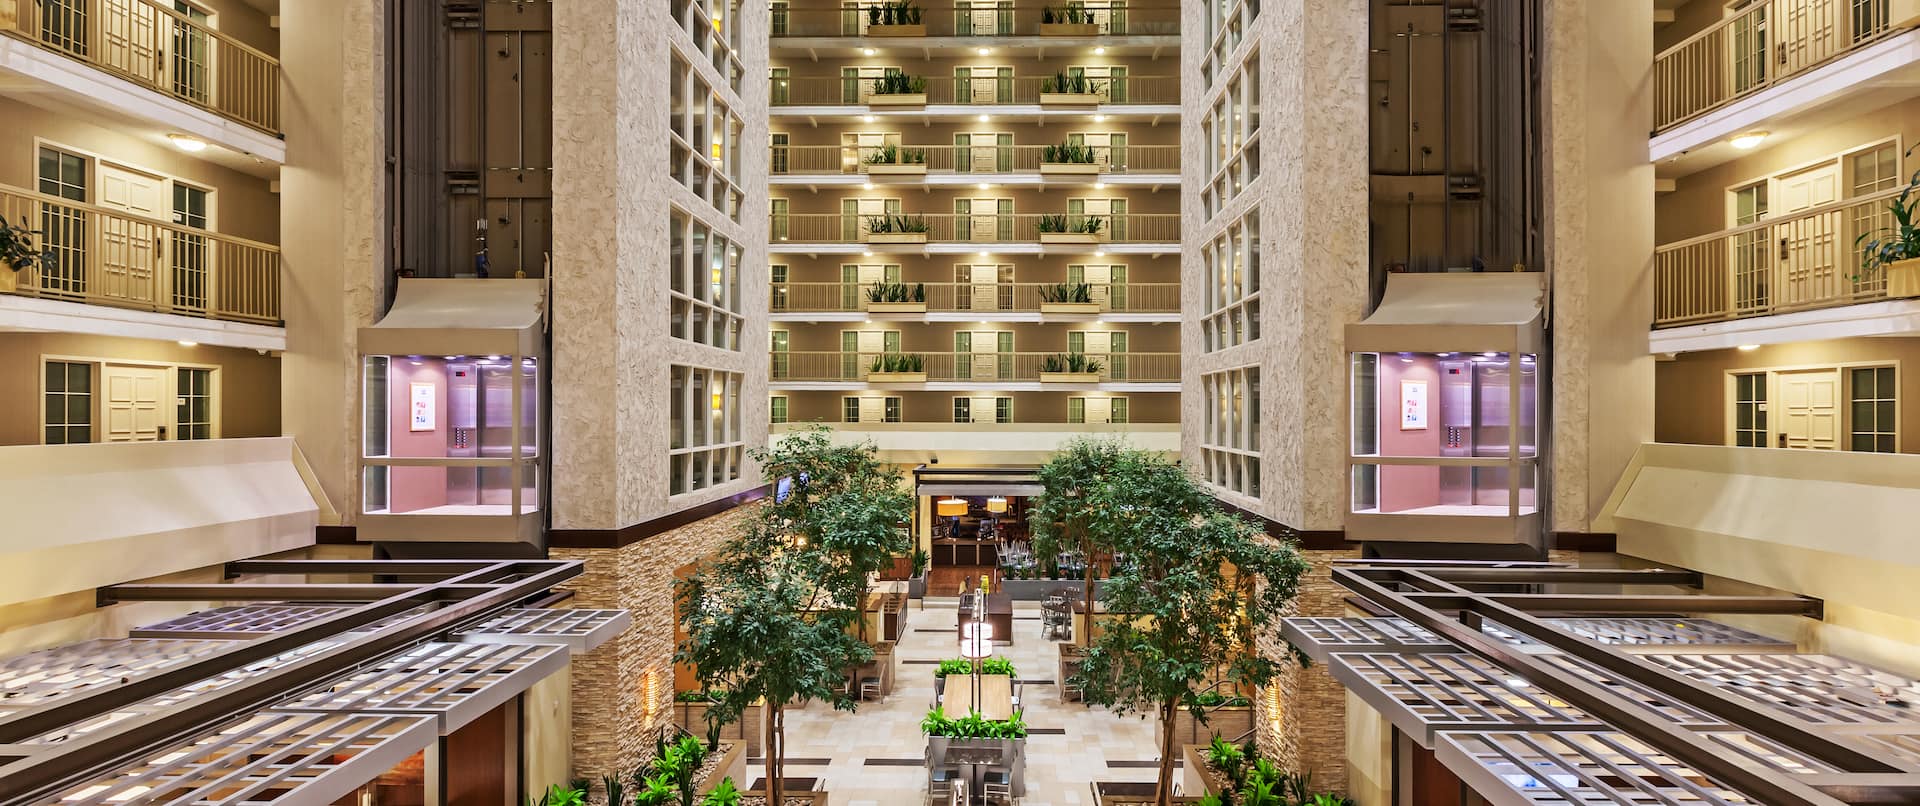 Hotel Lobby and Atrium